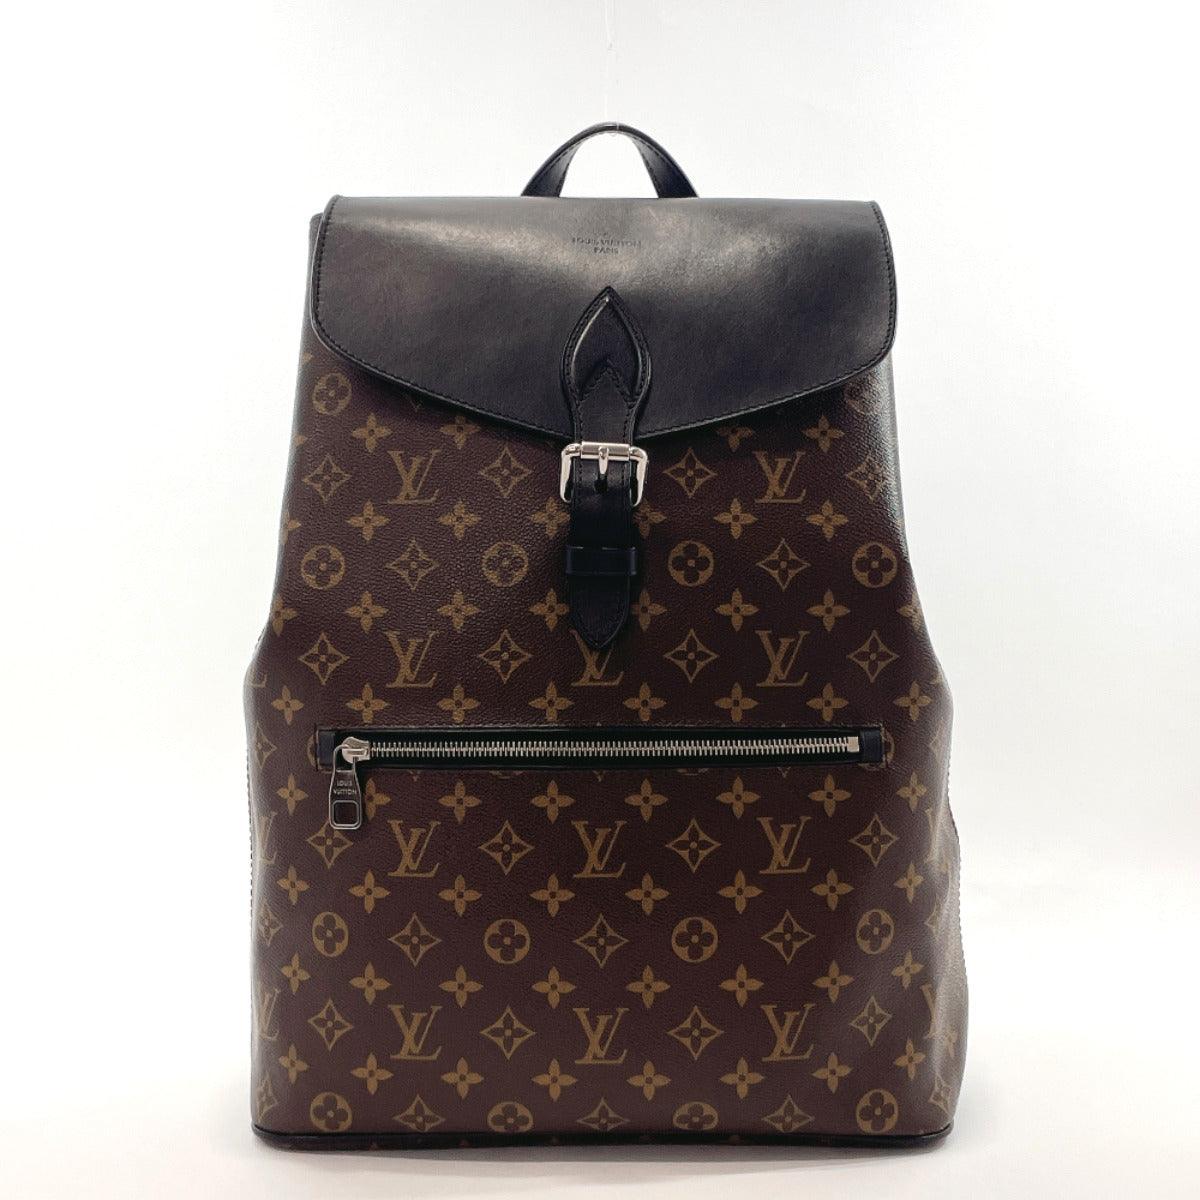 Preowned Louis Vuitton Monogram Macassar Canvas Palk Backpack Bag